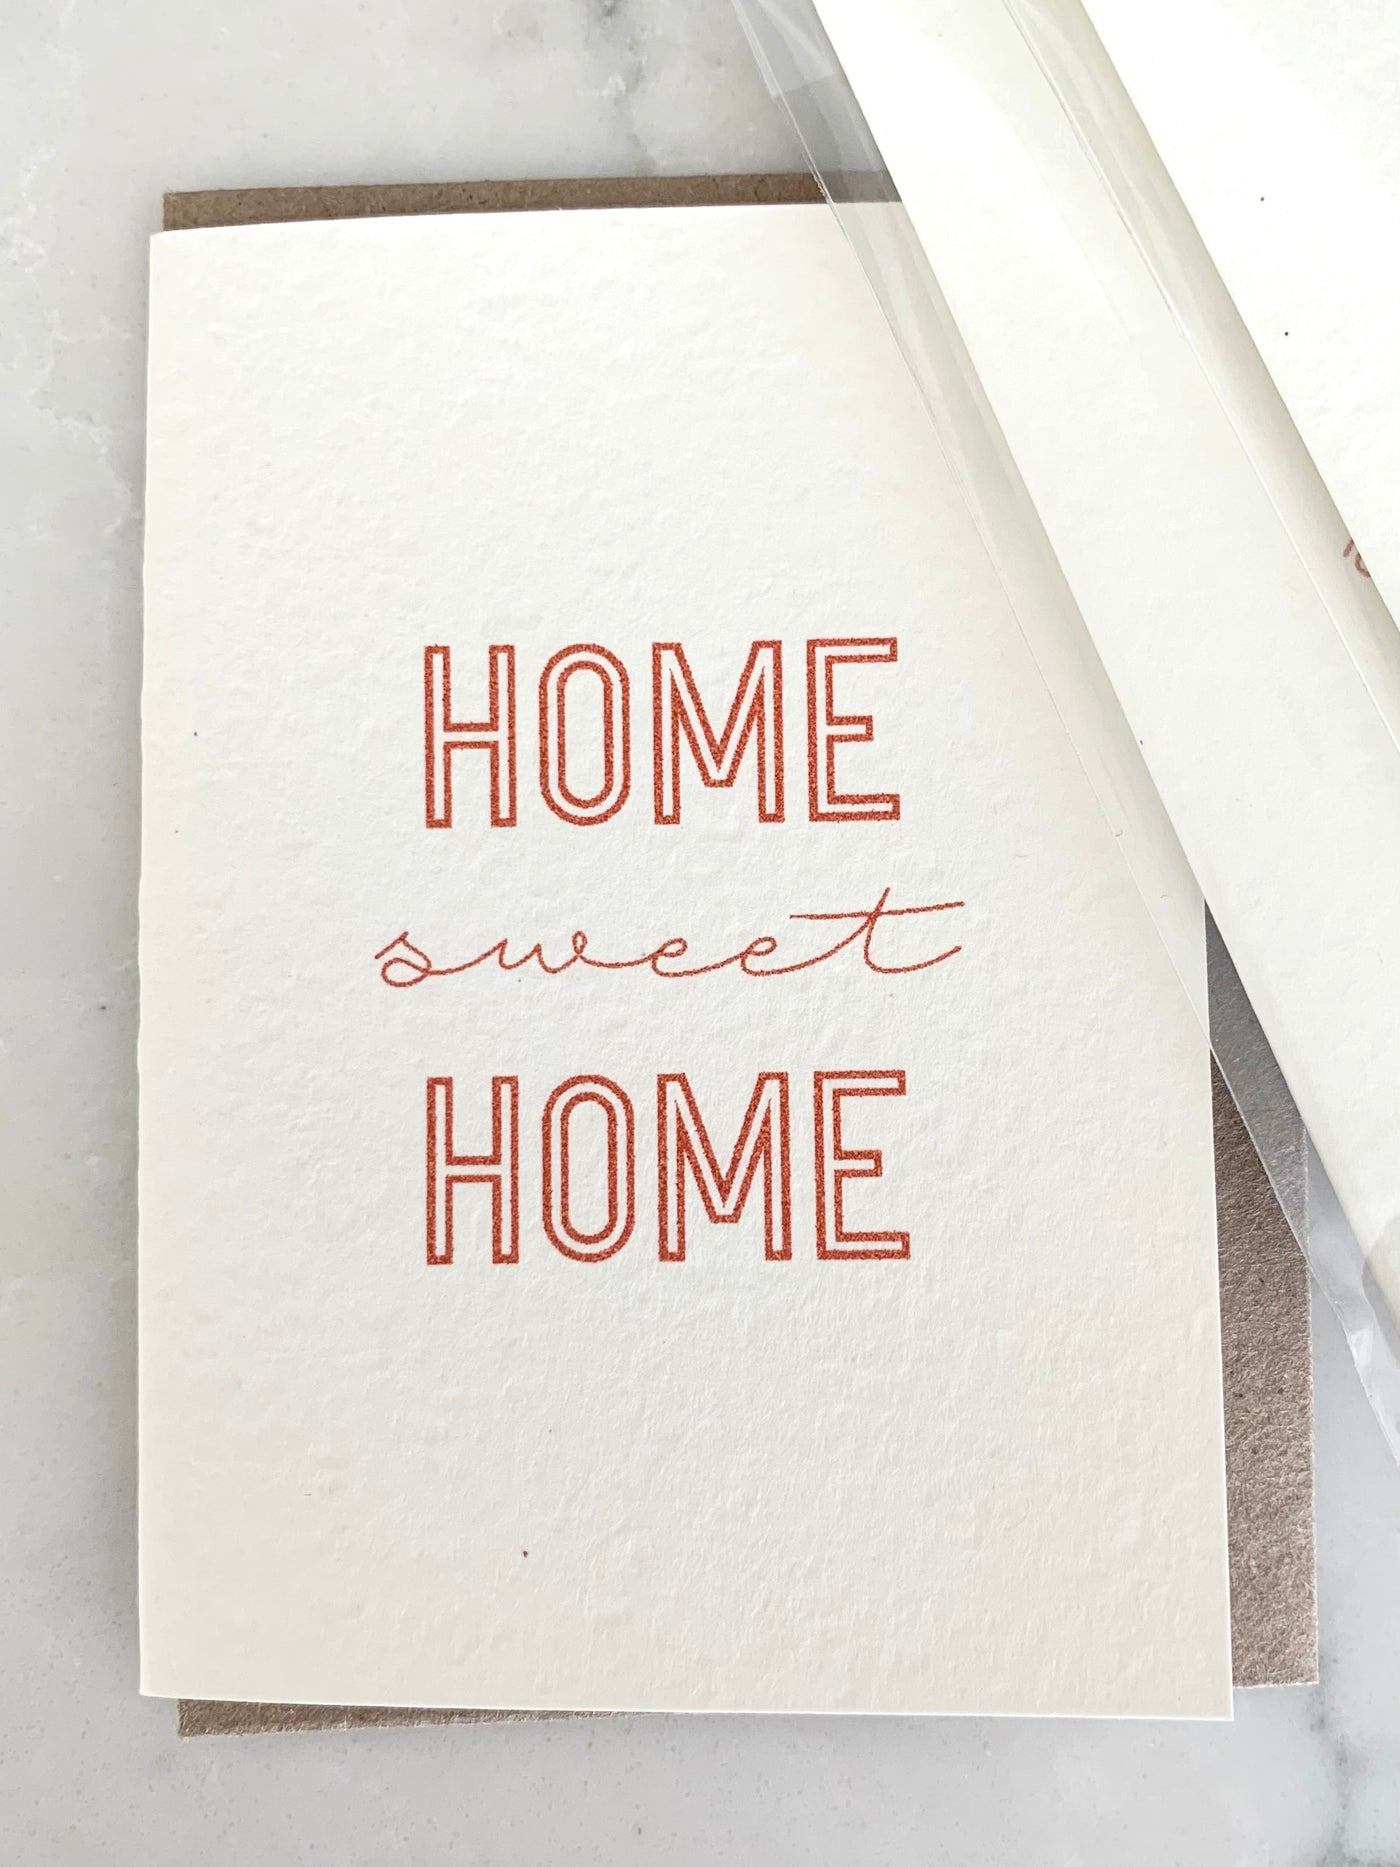 HOME SWEET HOME CARD